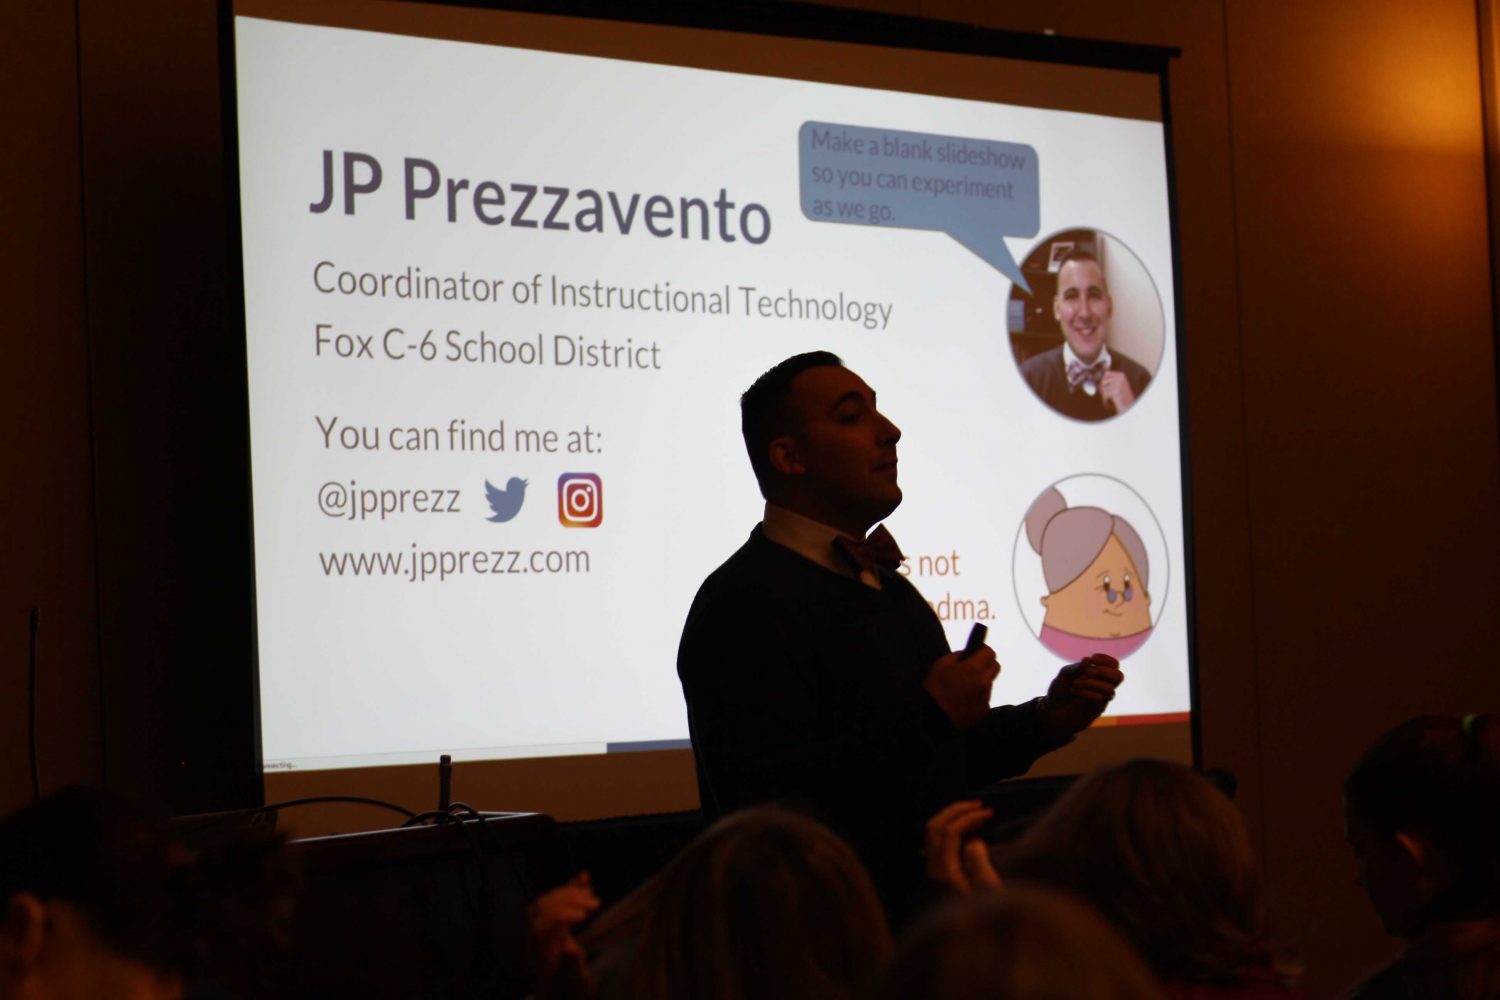 Prezzavento uses Google Slides to create exciting presentations